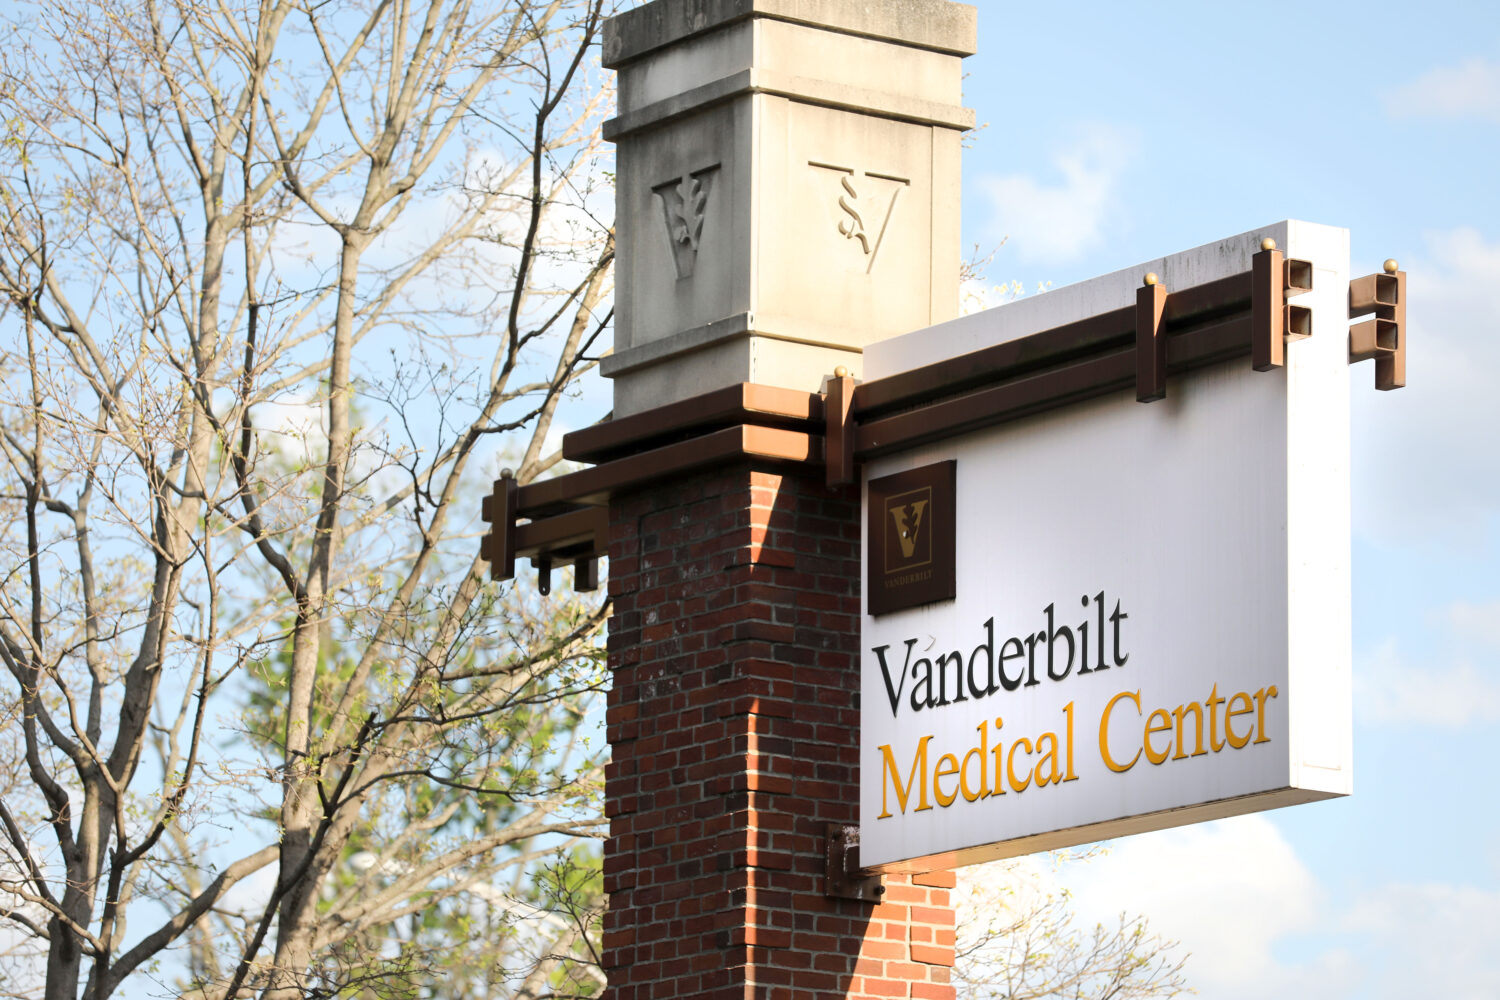 Vanderbilt University Medical Center Taps Philips Reduce Carbon Footprint